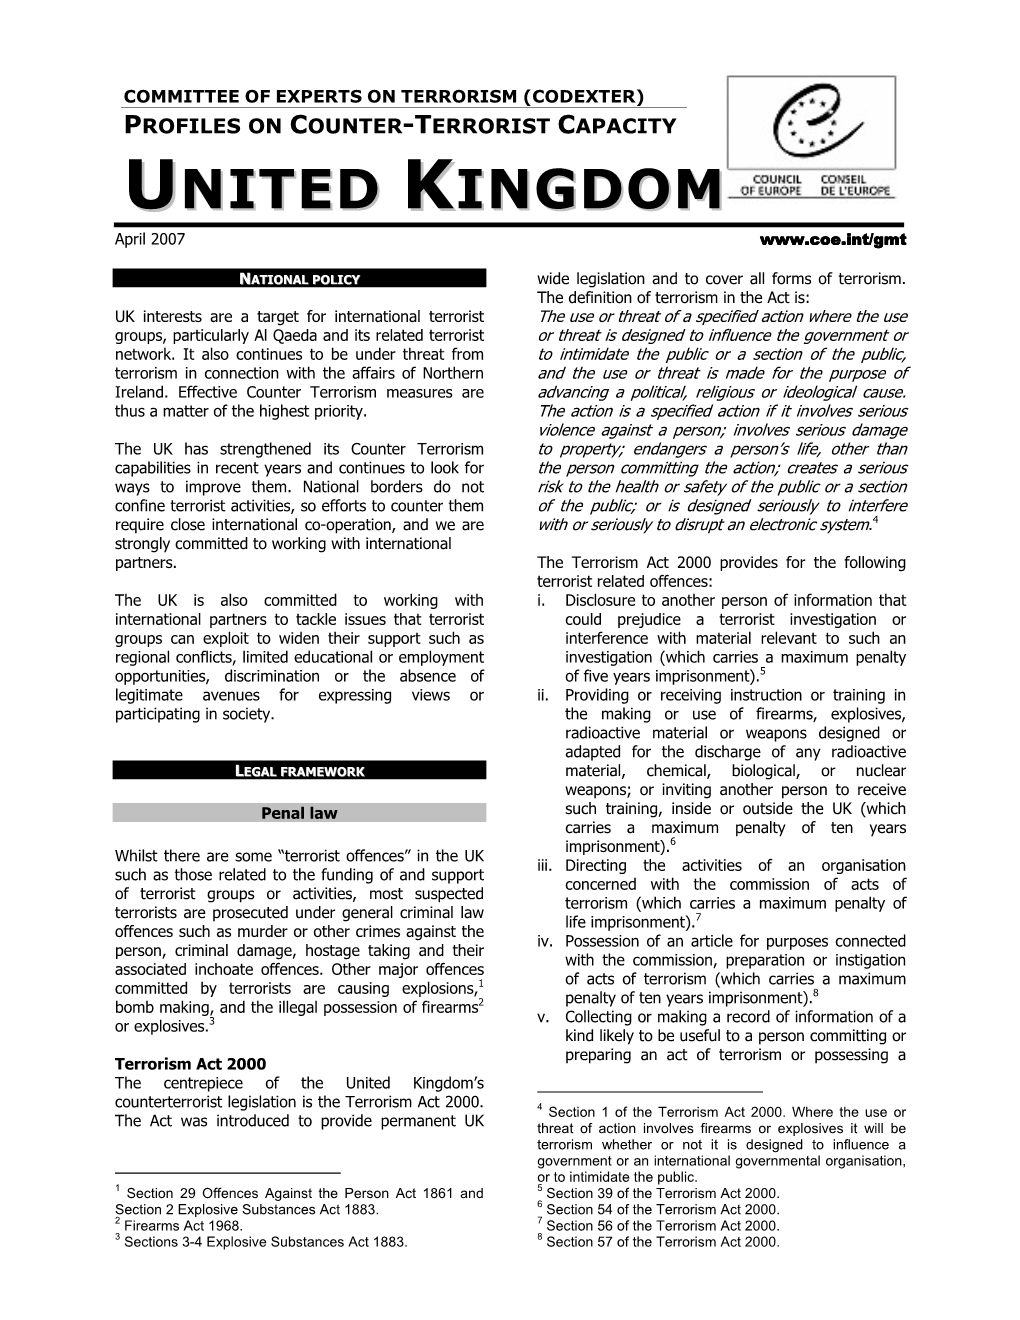 United Kingdom’S Counterterrorist Legislation Is the Terrorism Act 2000